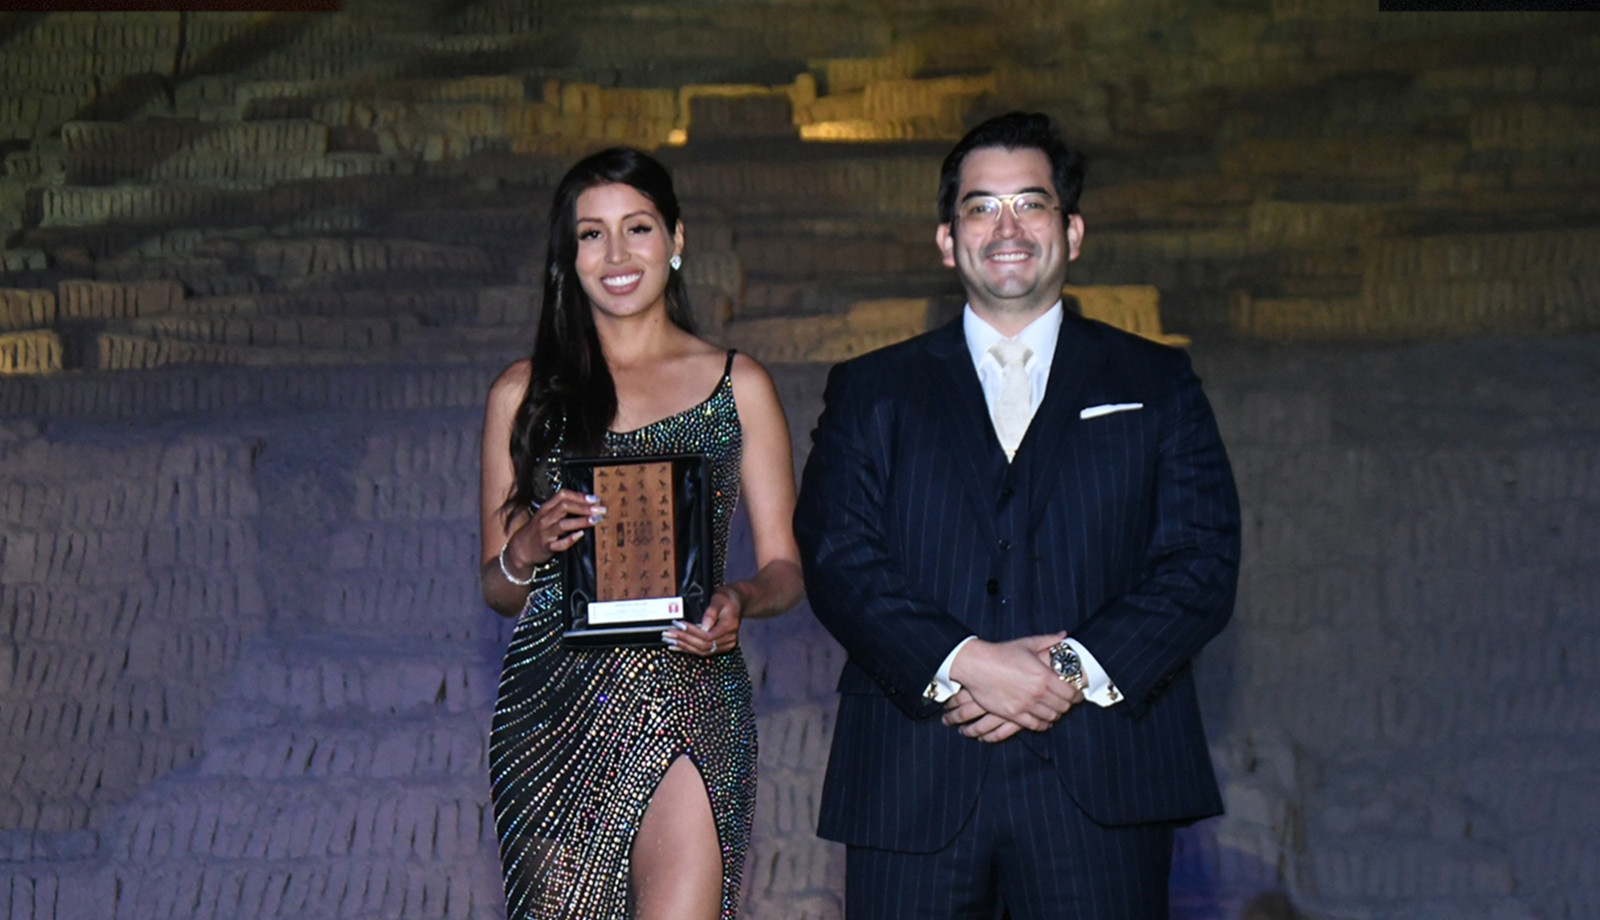 Double racewalking world champion García honoured at Peru NOC awards ceremony